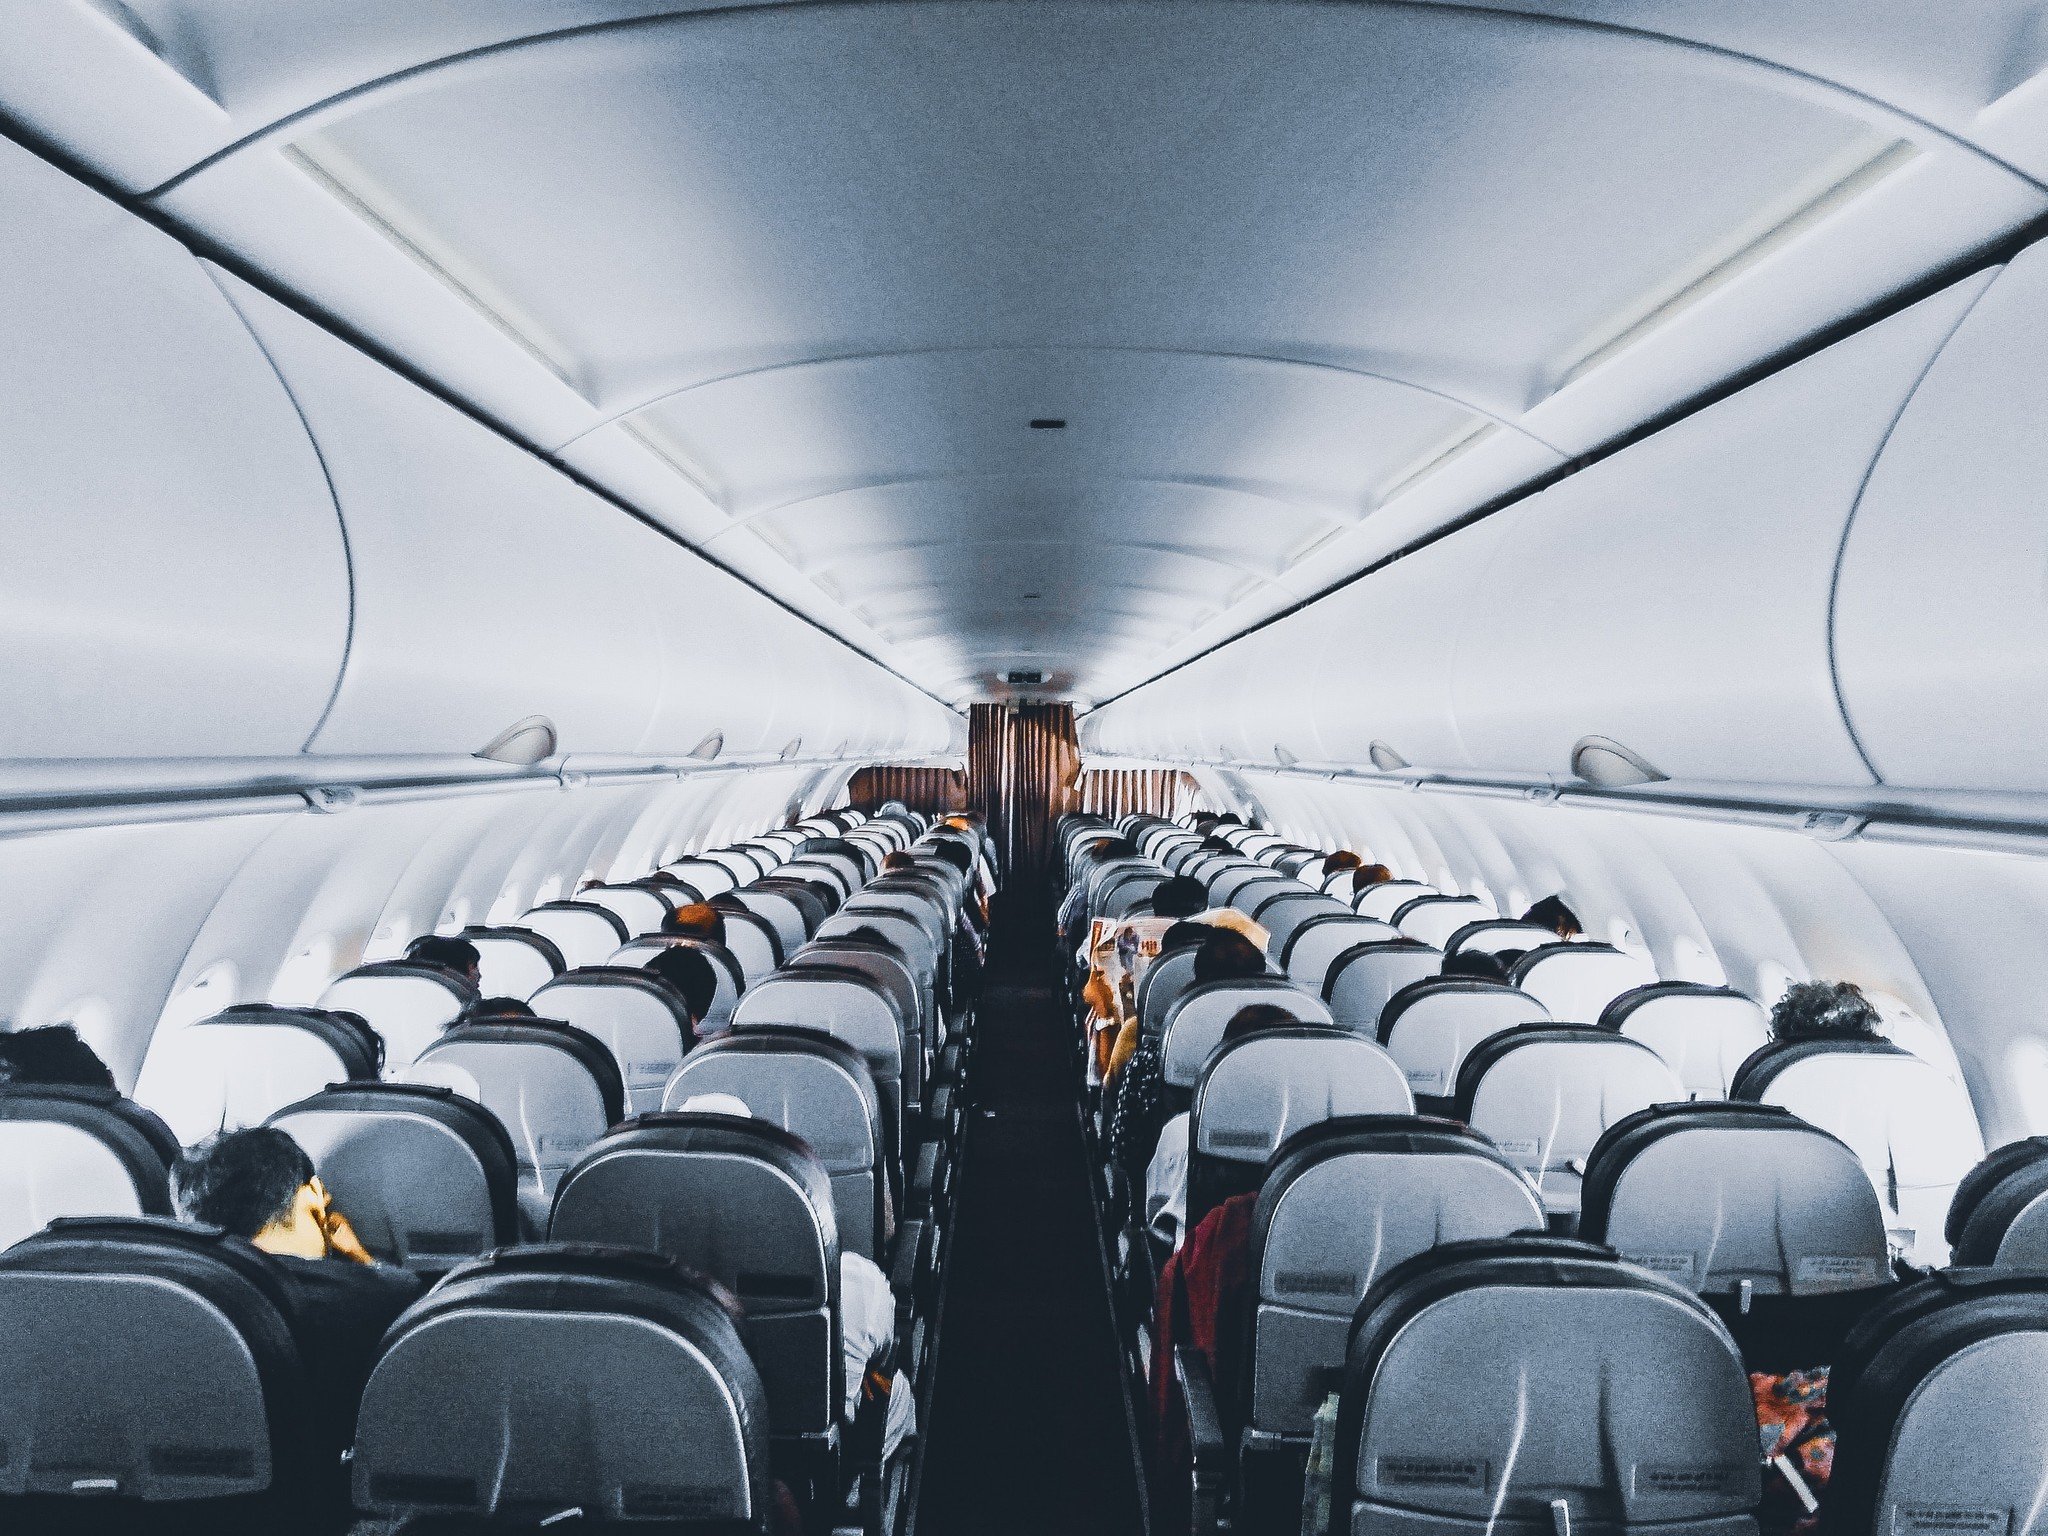 inside-airplane-main-cabin-passengers.jpg